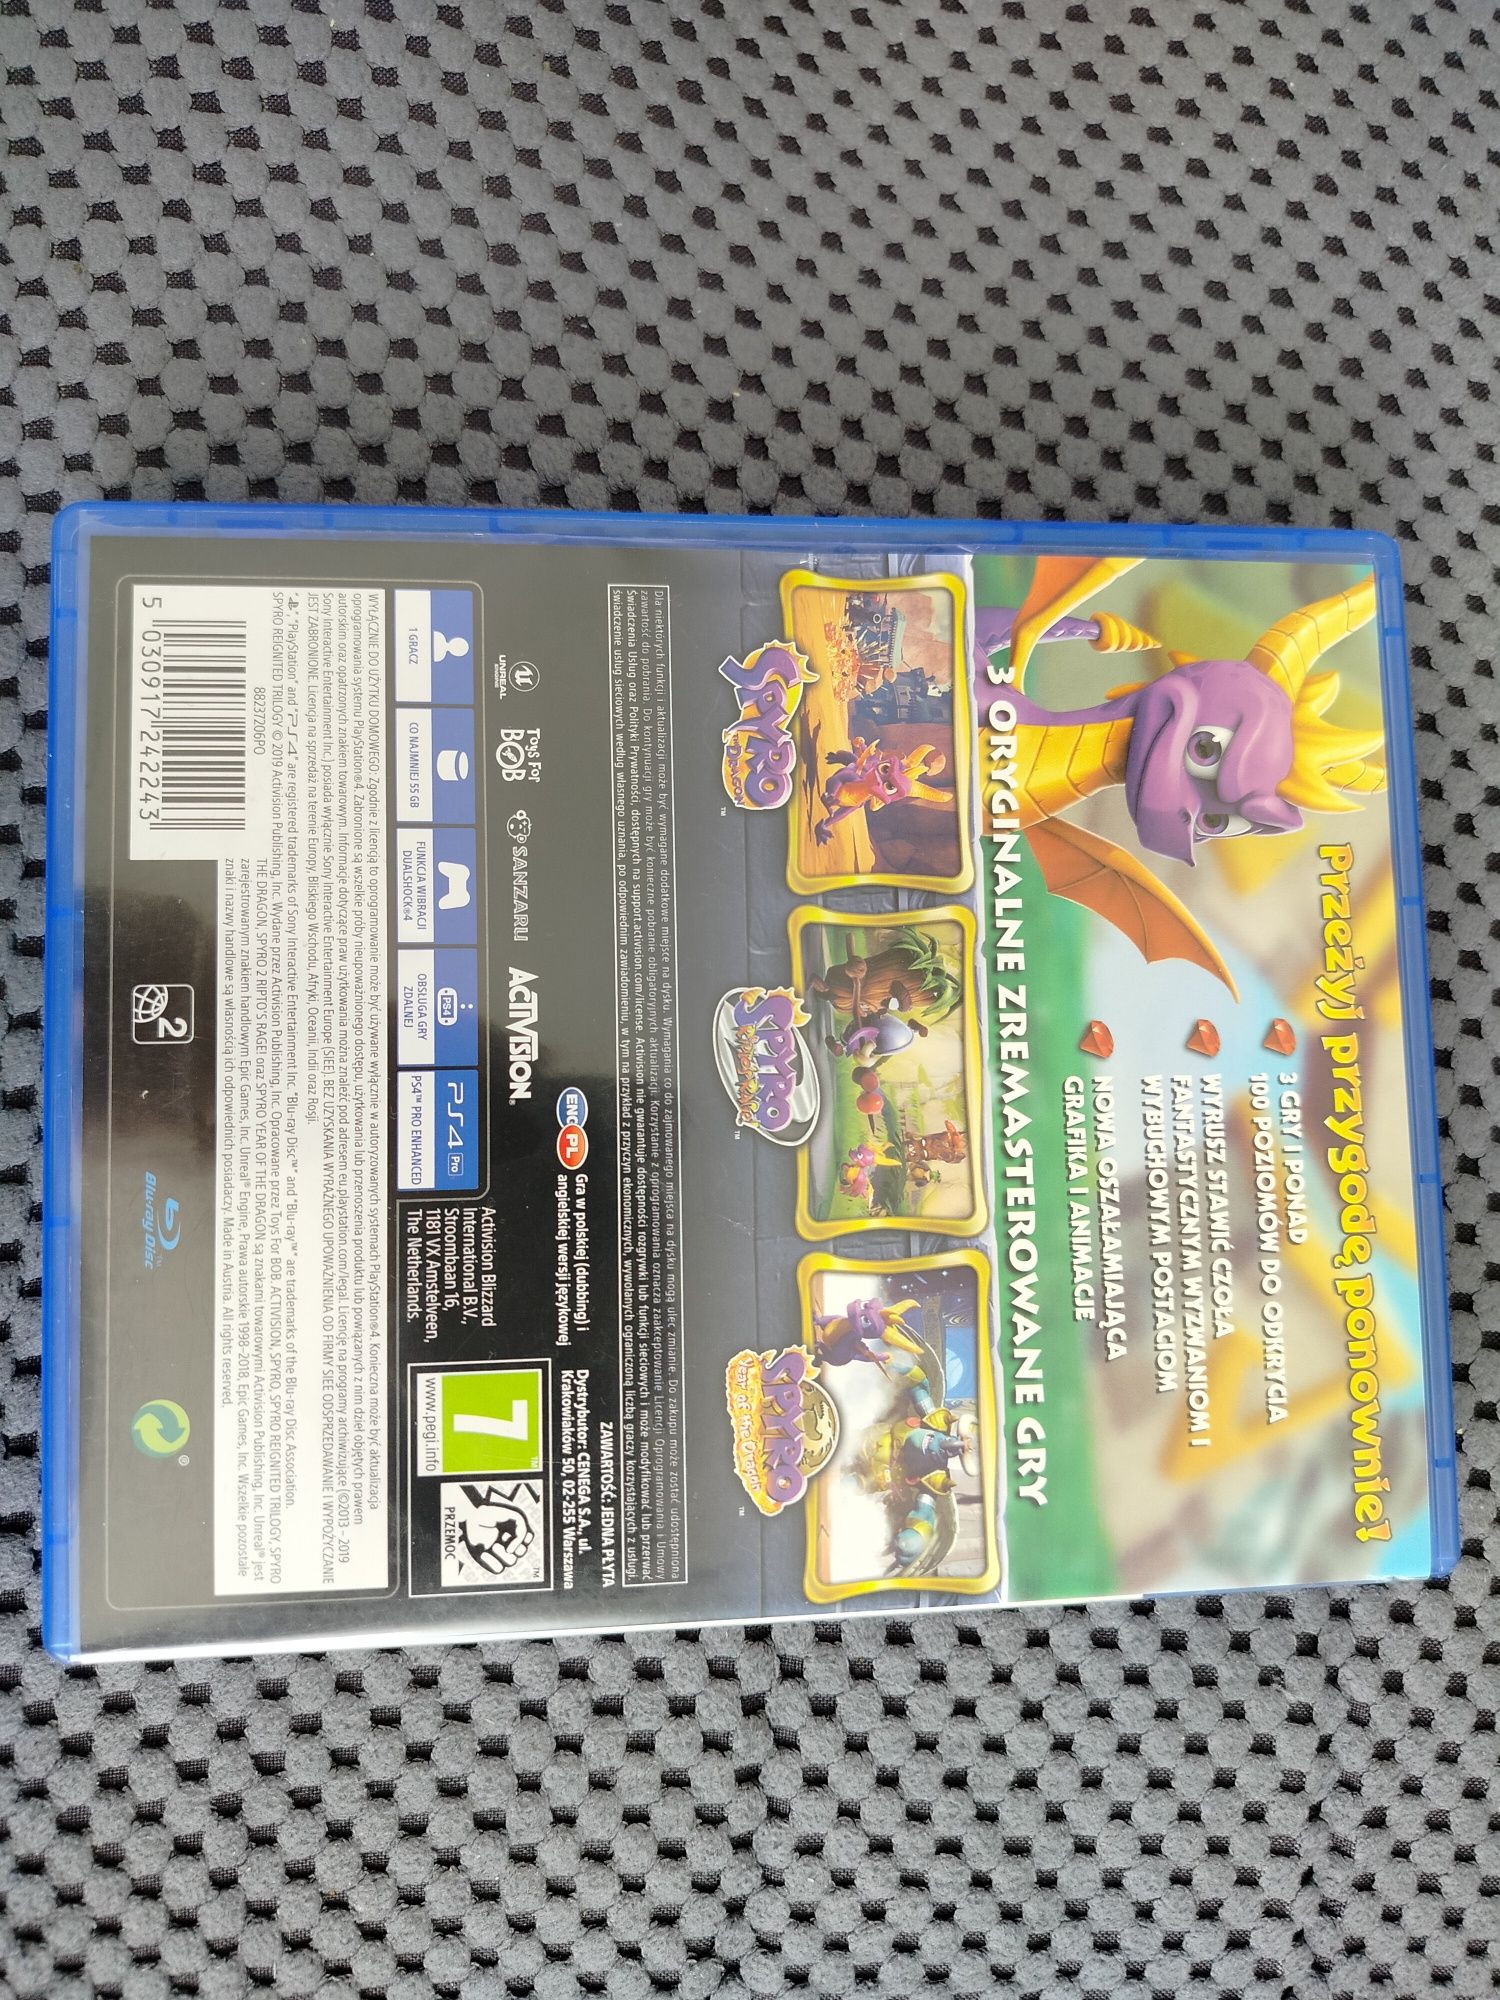 Gra na PS4 Spyro Trylogia PL